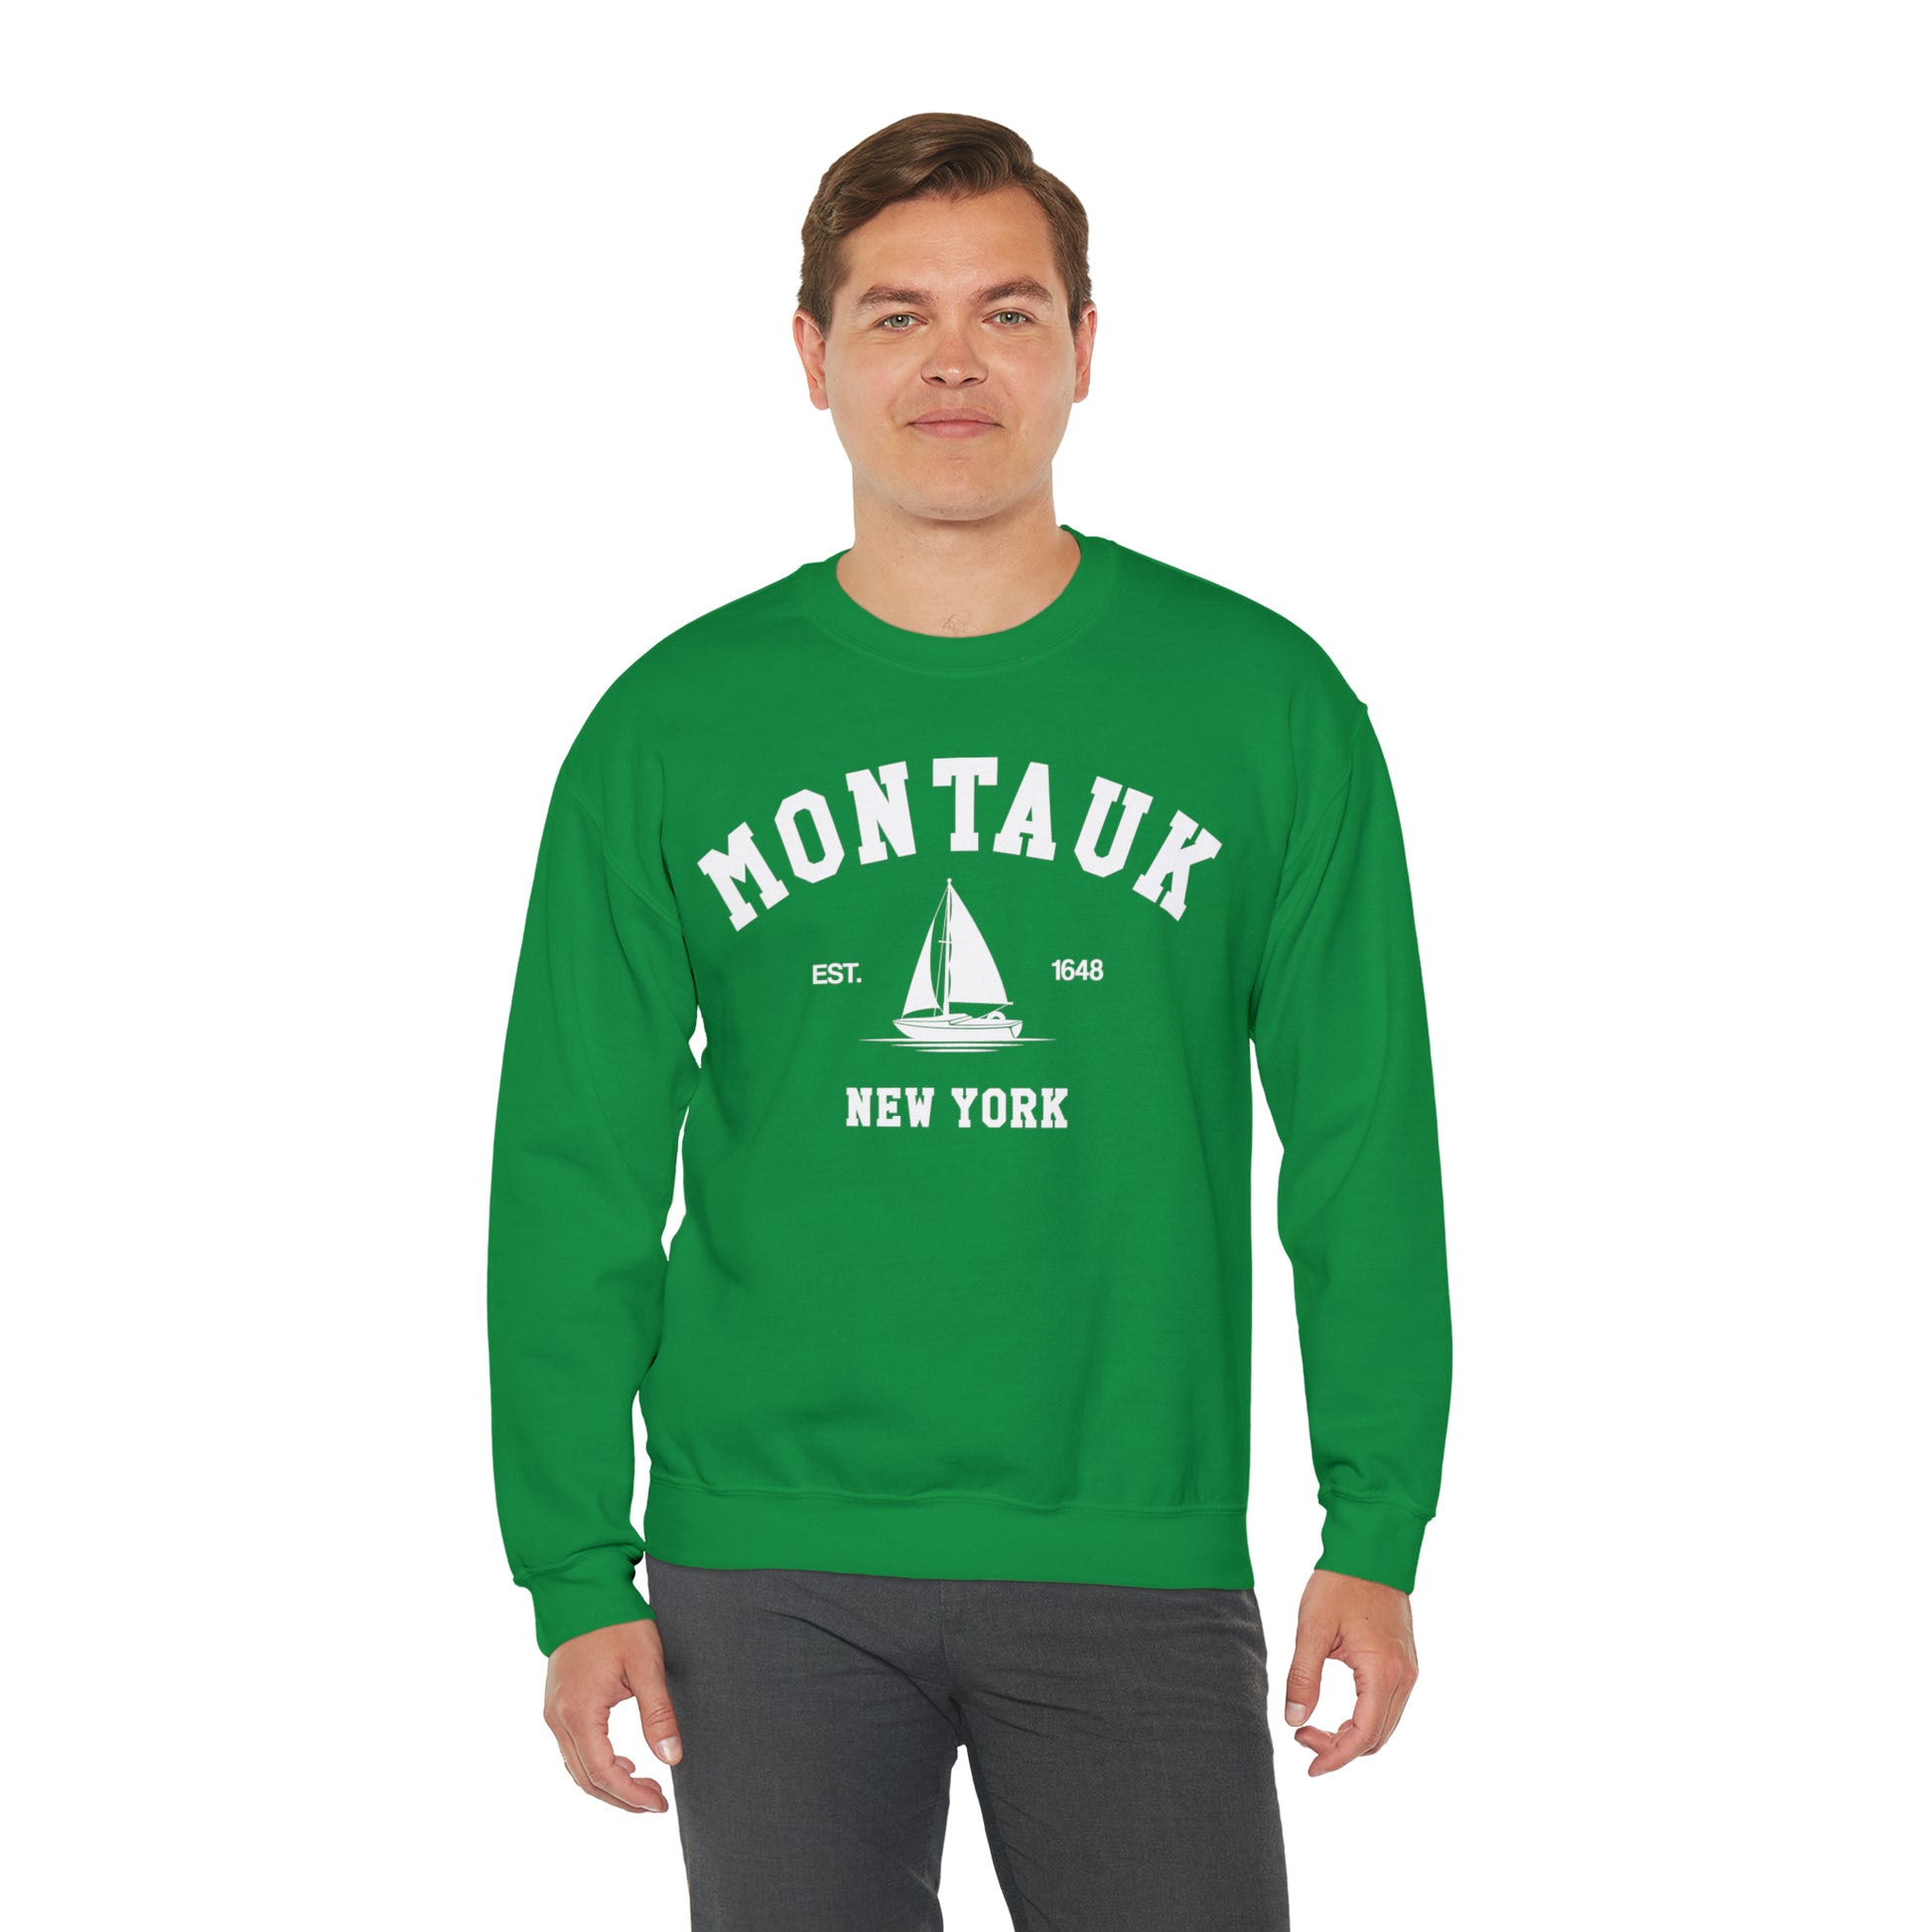 Montauk Sweatshirt, Vintage Hamptons New York NY Sailing Boating Beach Town Graphic Crewneck Sweater Jumper Pullover Men Women Aesthetic Top Starcove Fashion